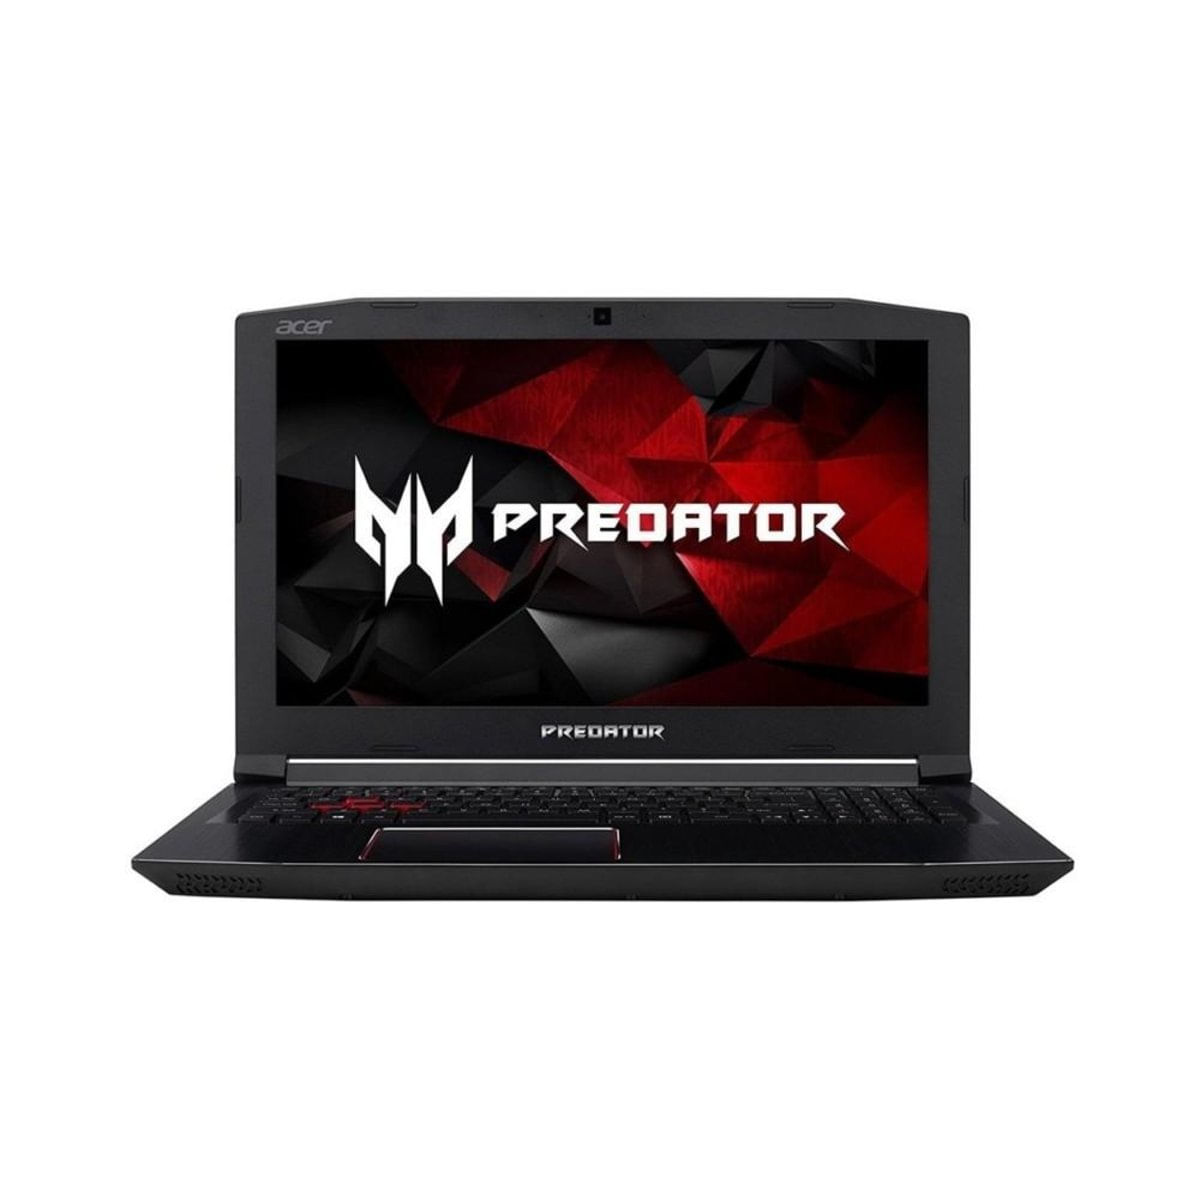 Notebookgamer - Acer G3-571-77qk I7-7700hq 2.80ghz 16gb 256gb Ssd Geforce Gtx 1060 Windows 10 Professional Predator 15,6